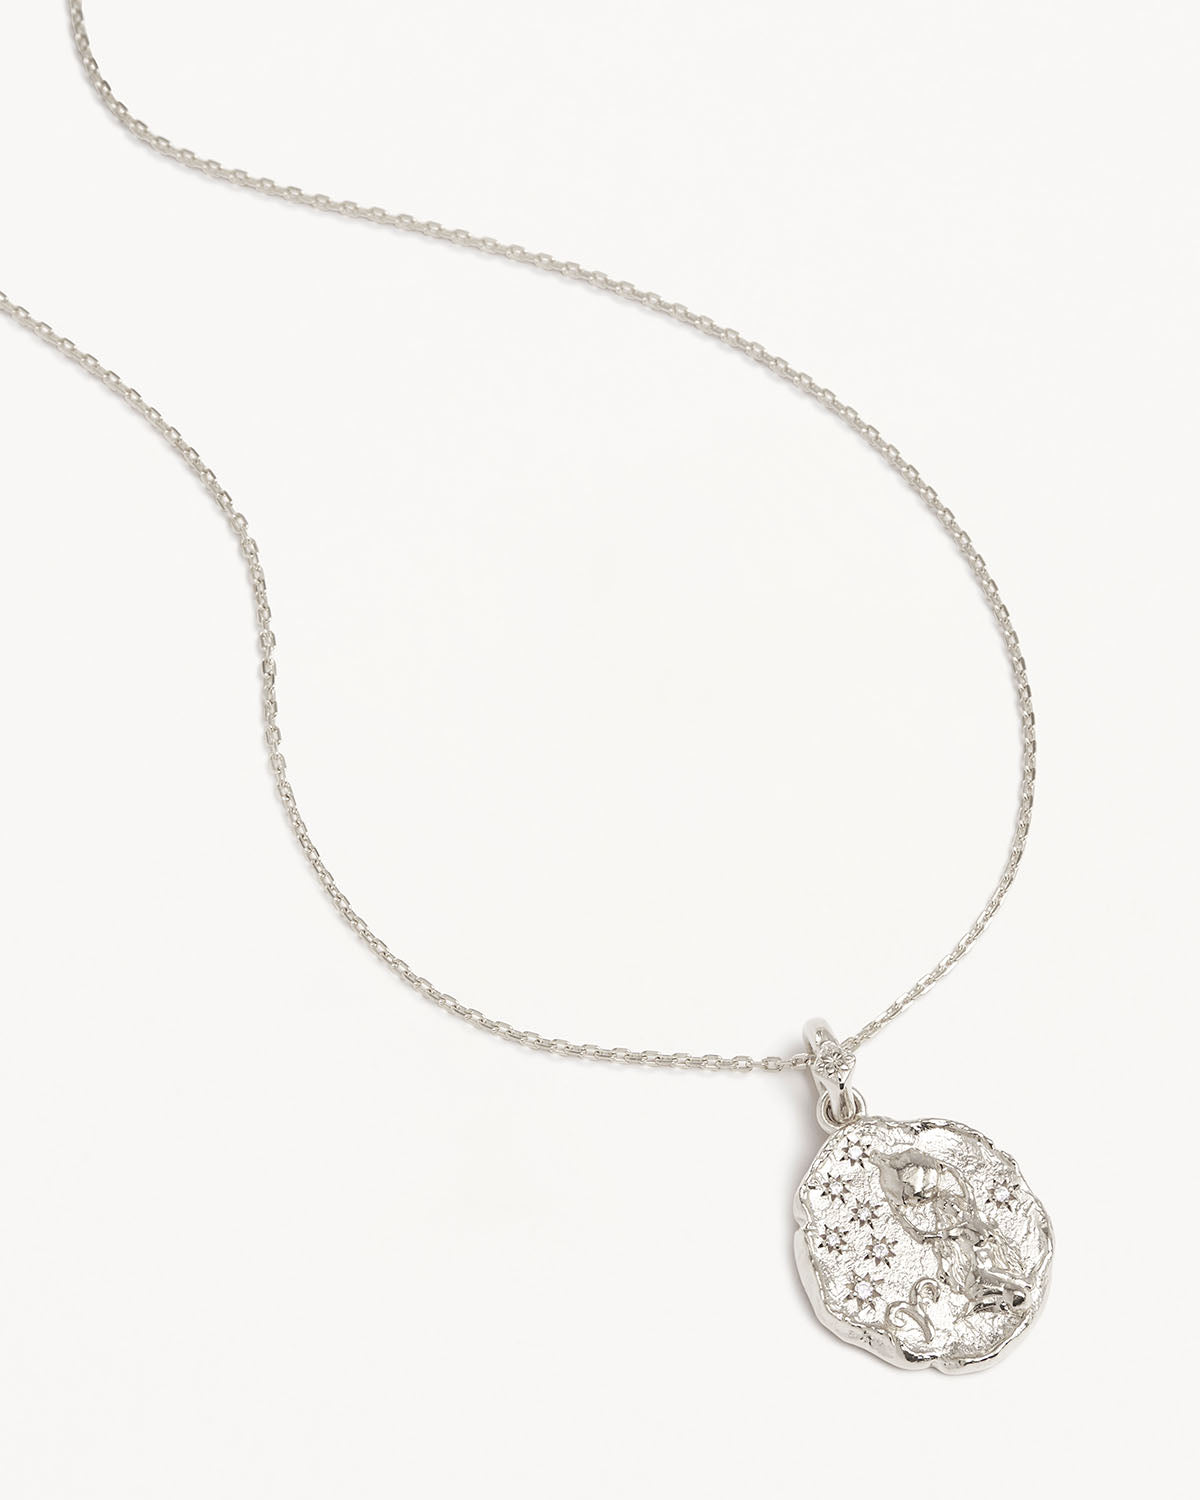 Zodiac Necklace For Men - Astrological Sign Necklace